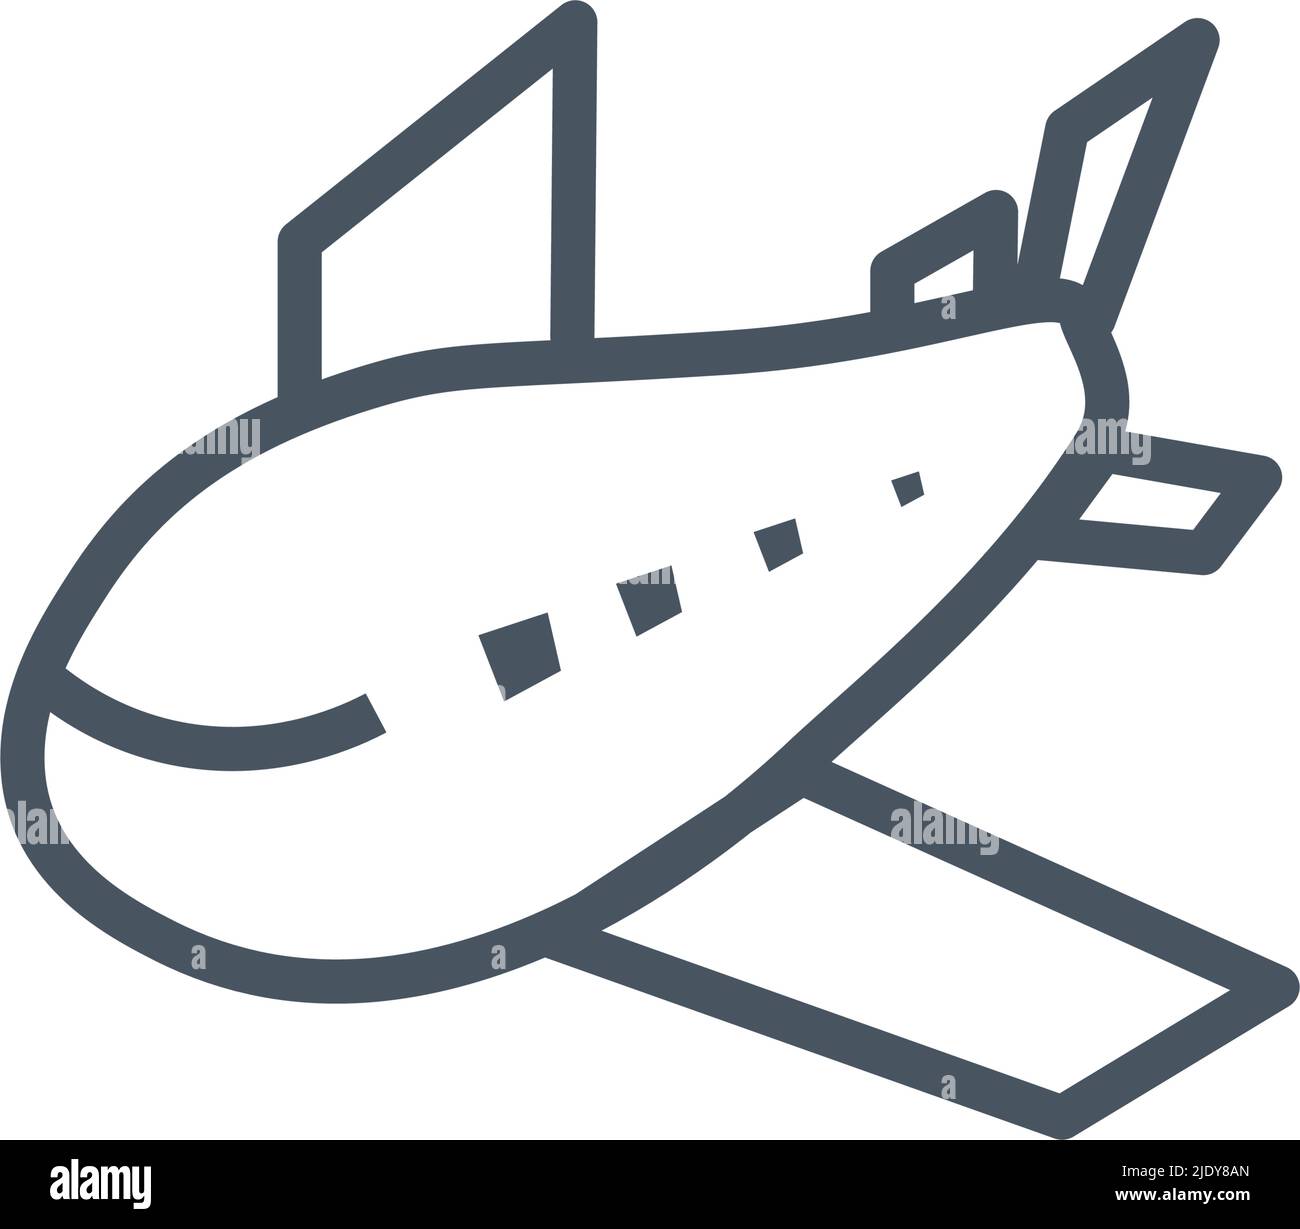 Flugzeugsymbol im Flug. Flugzeug. Bearbeitbarer Vektor. Stock Vektor